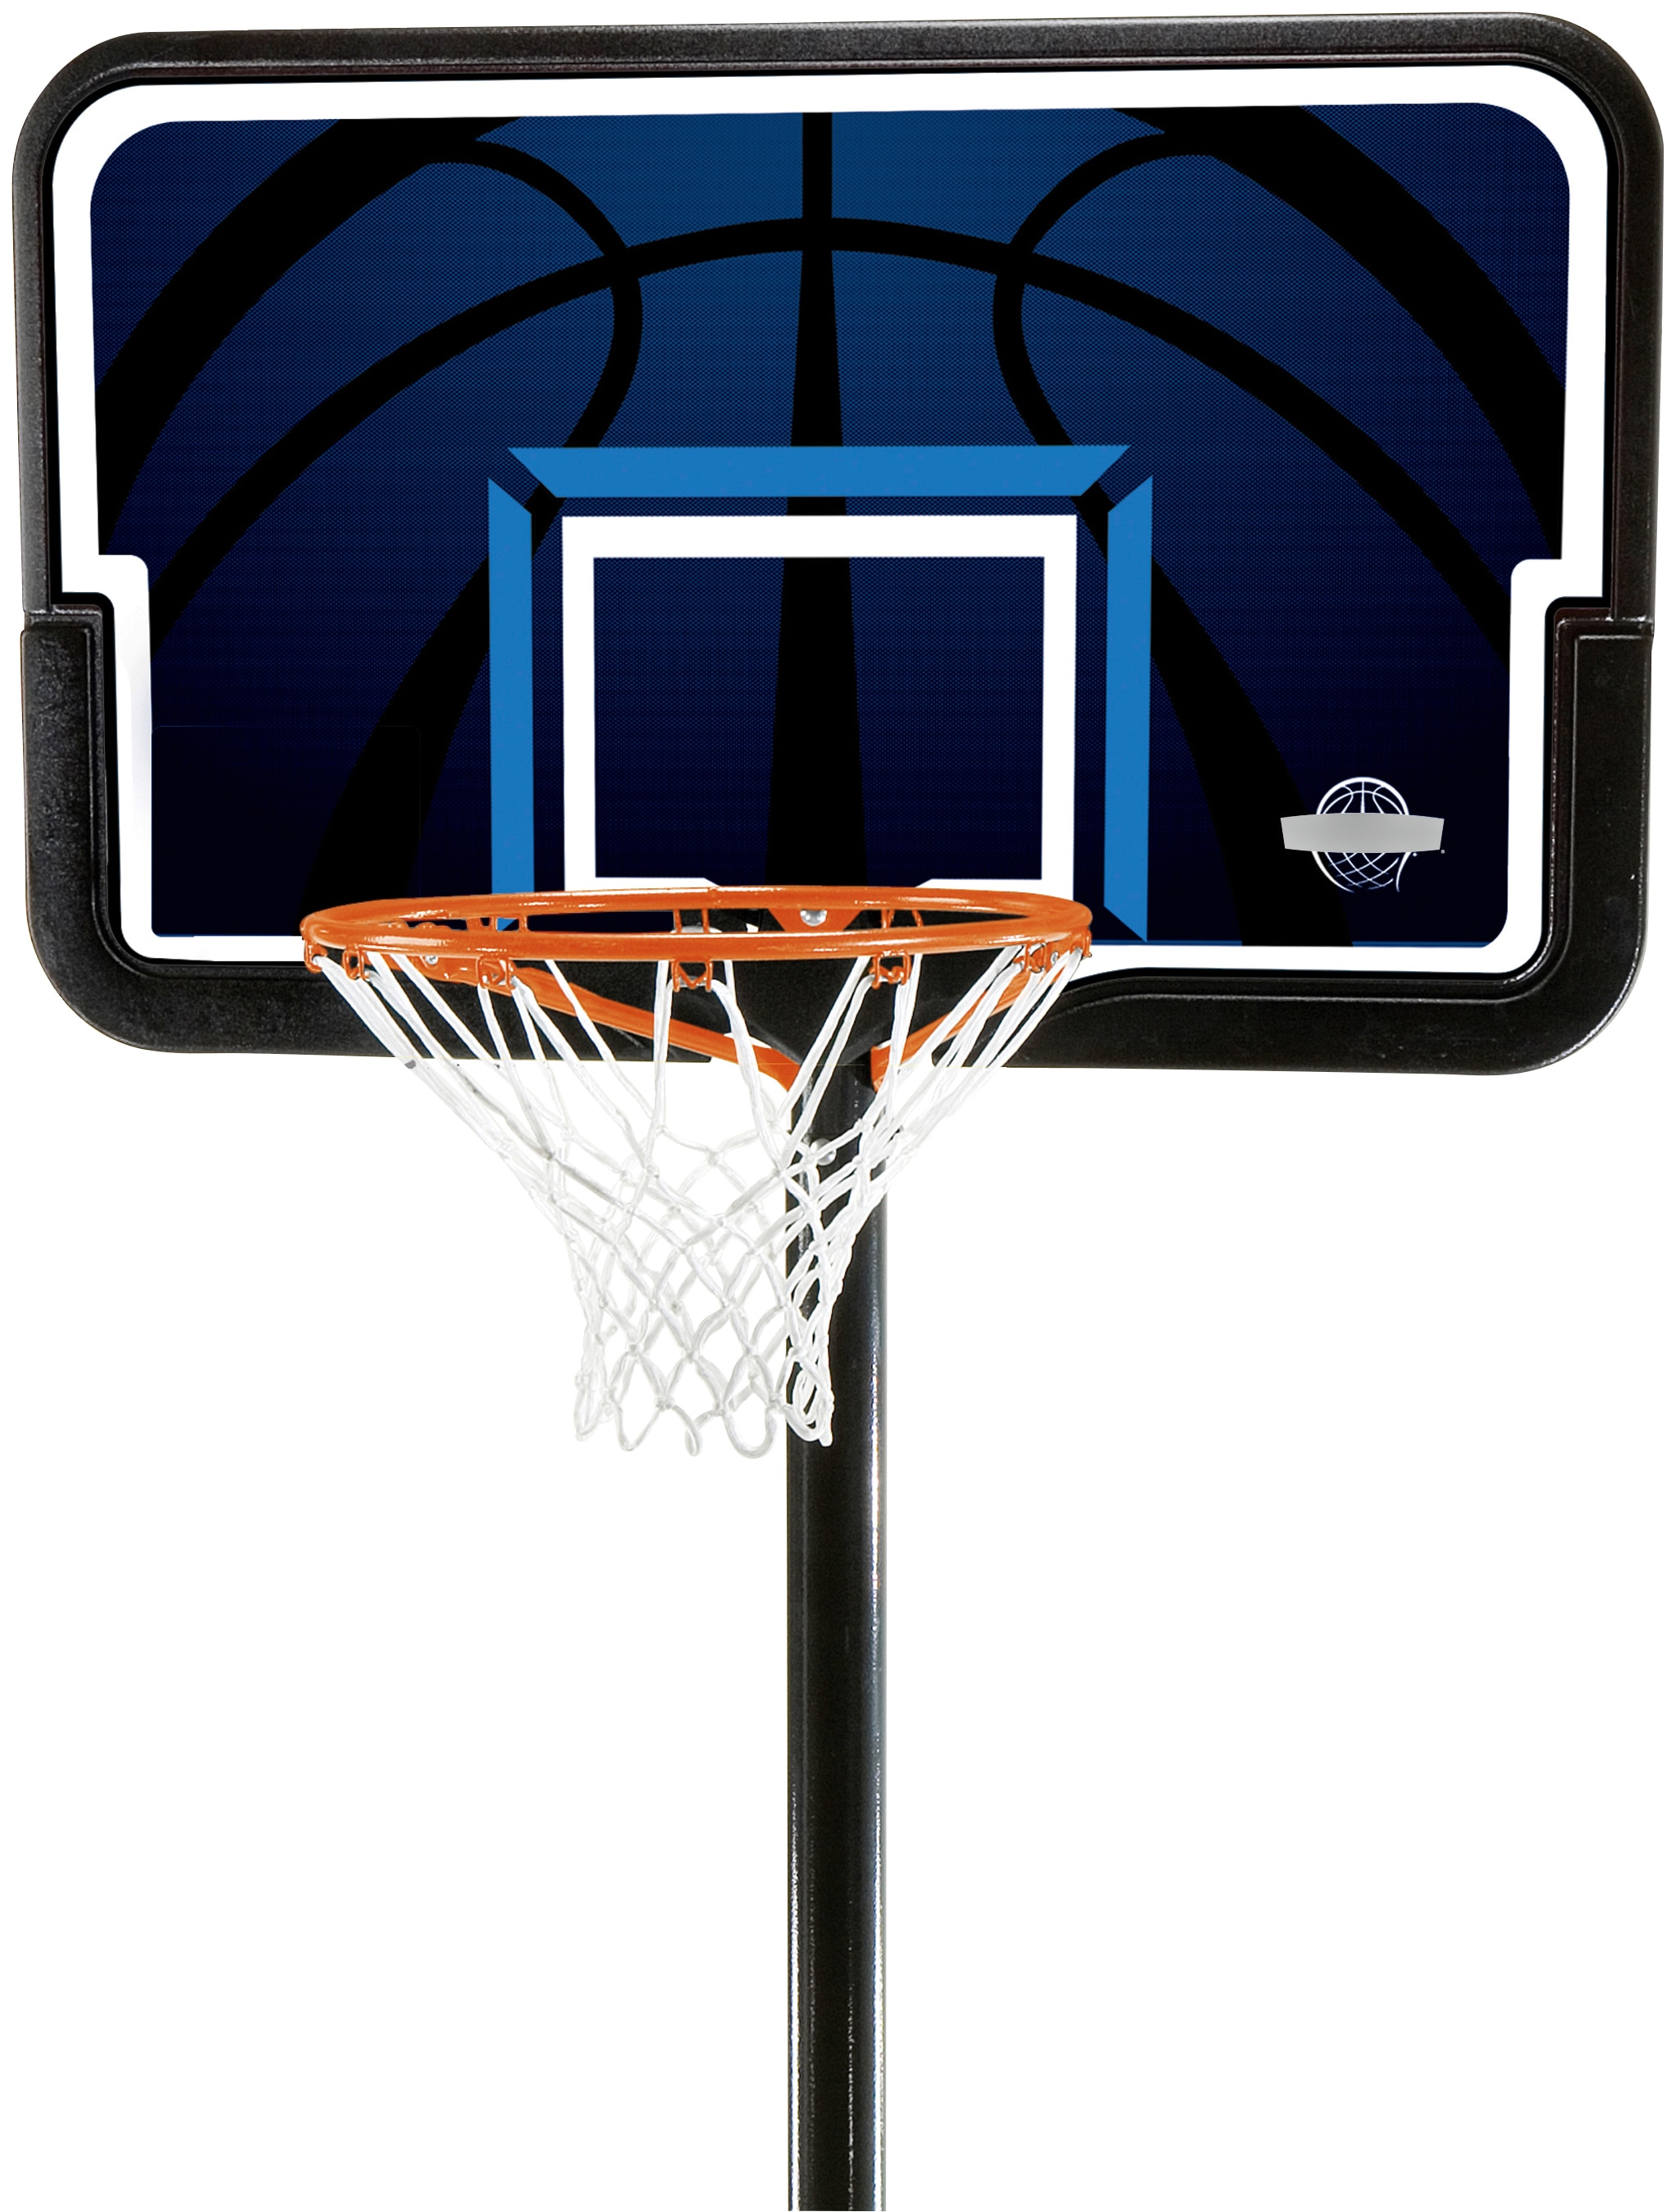 schwarz/blau Basketballkorb BAUR »Nevada«, 50NRTH höhenverstellbar |